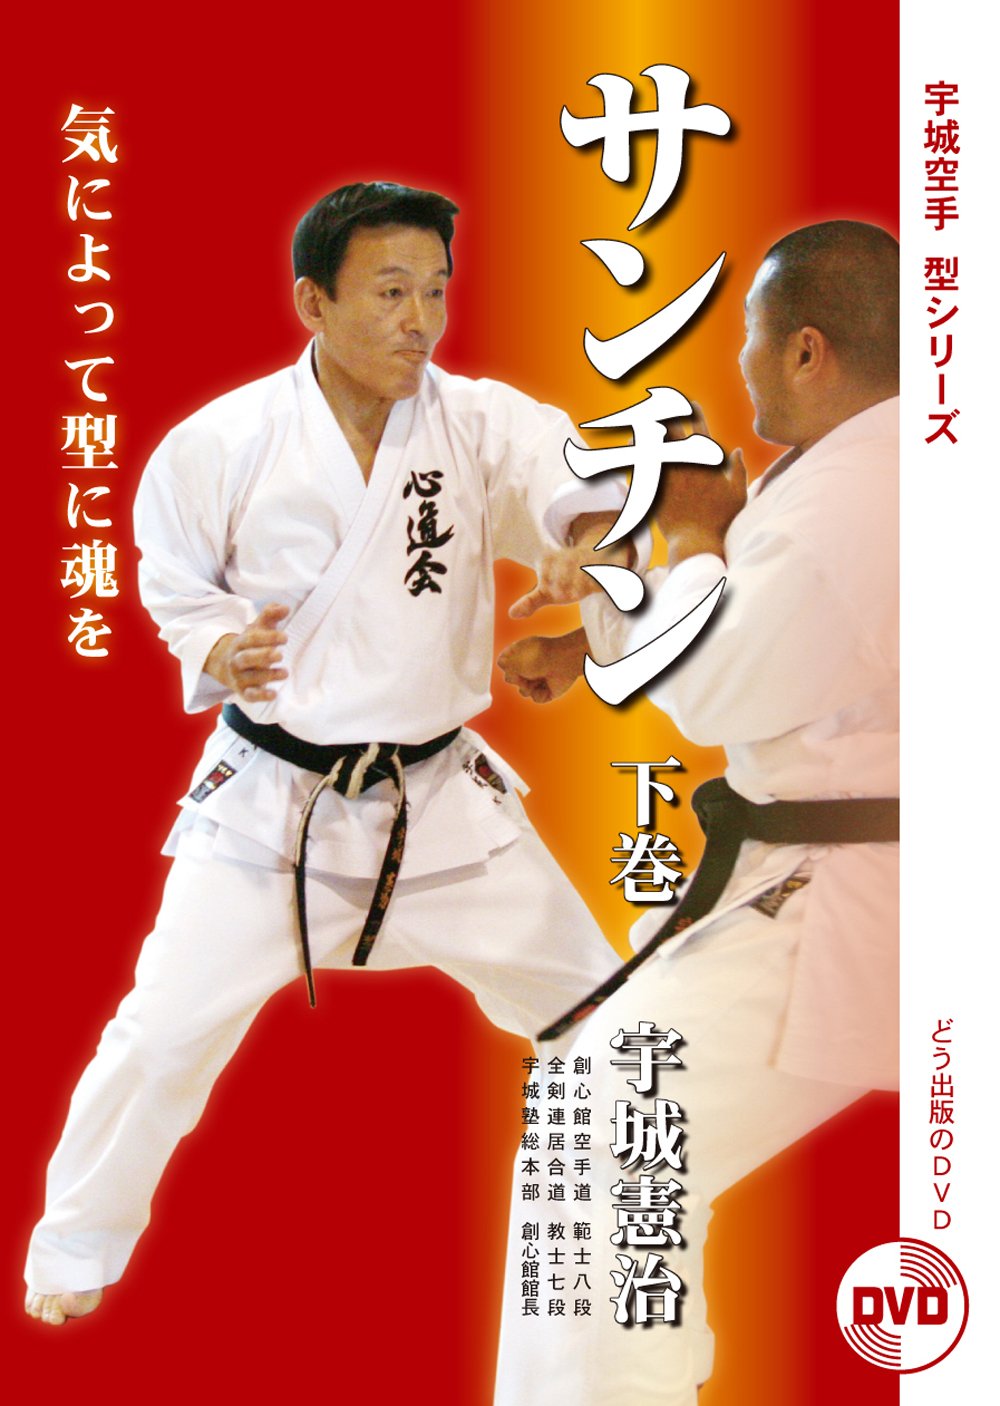 Ushiro Karate: Sanchin DVD 3 by Kenji Ushiro - Budovideos